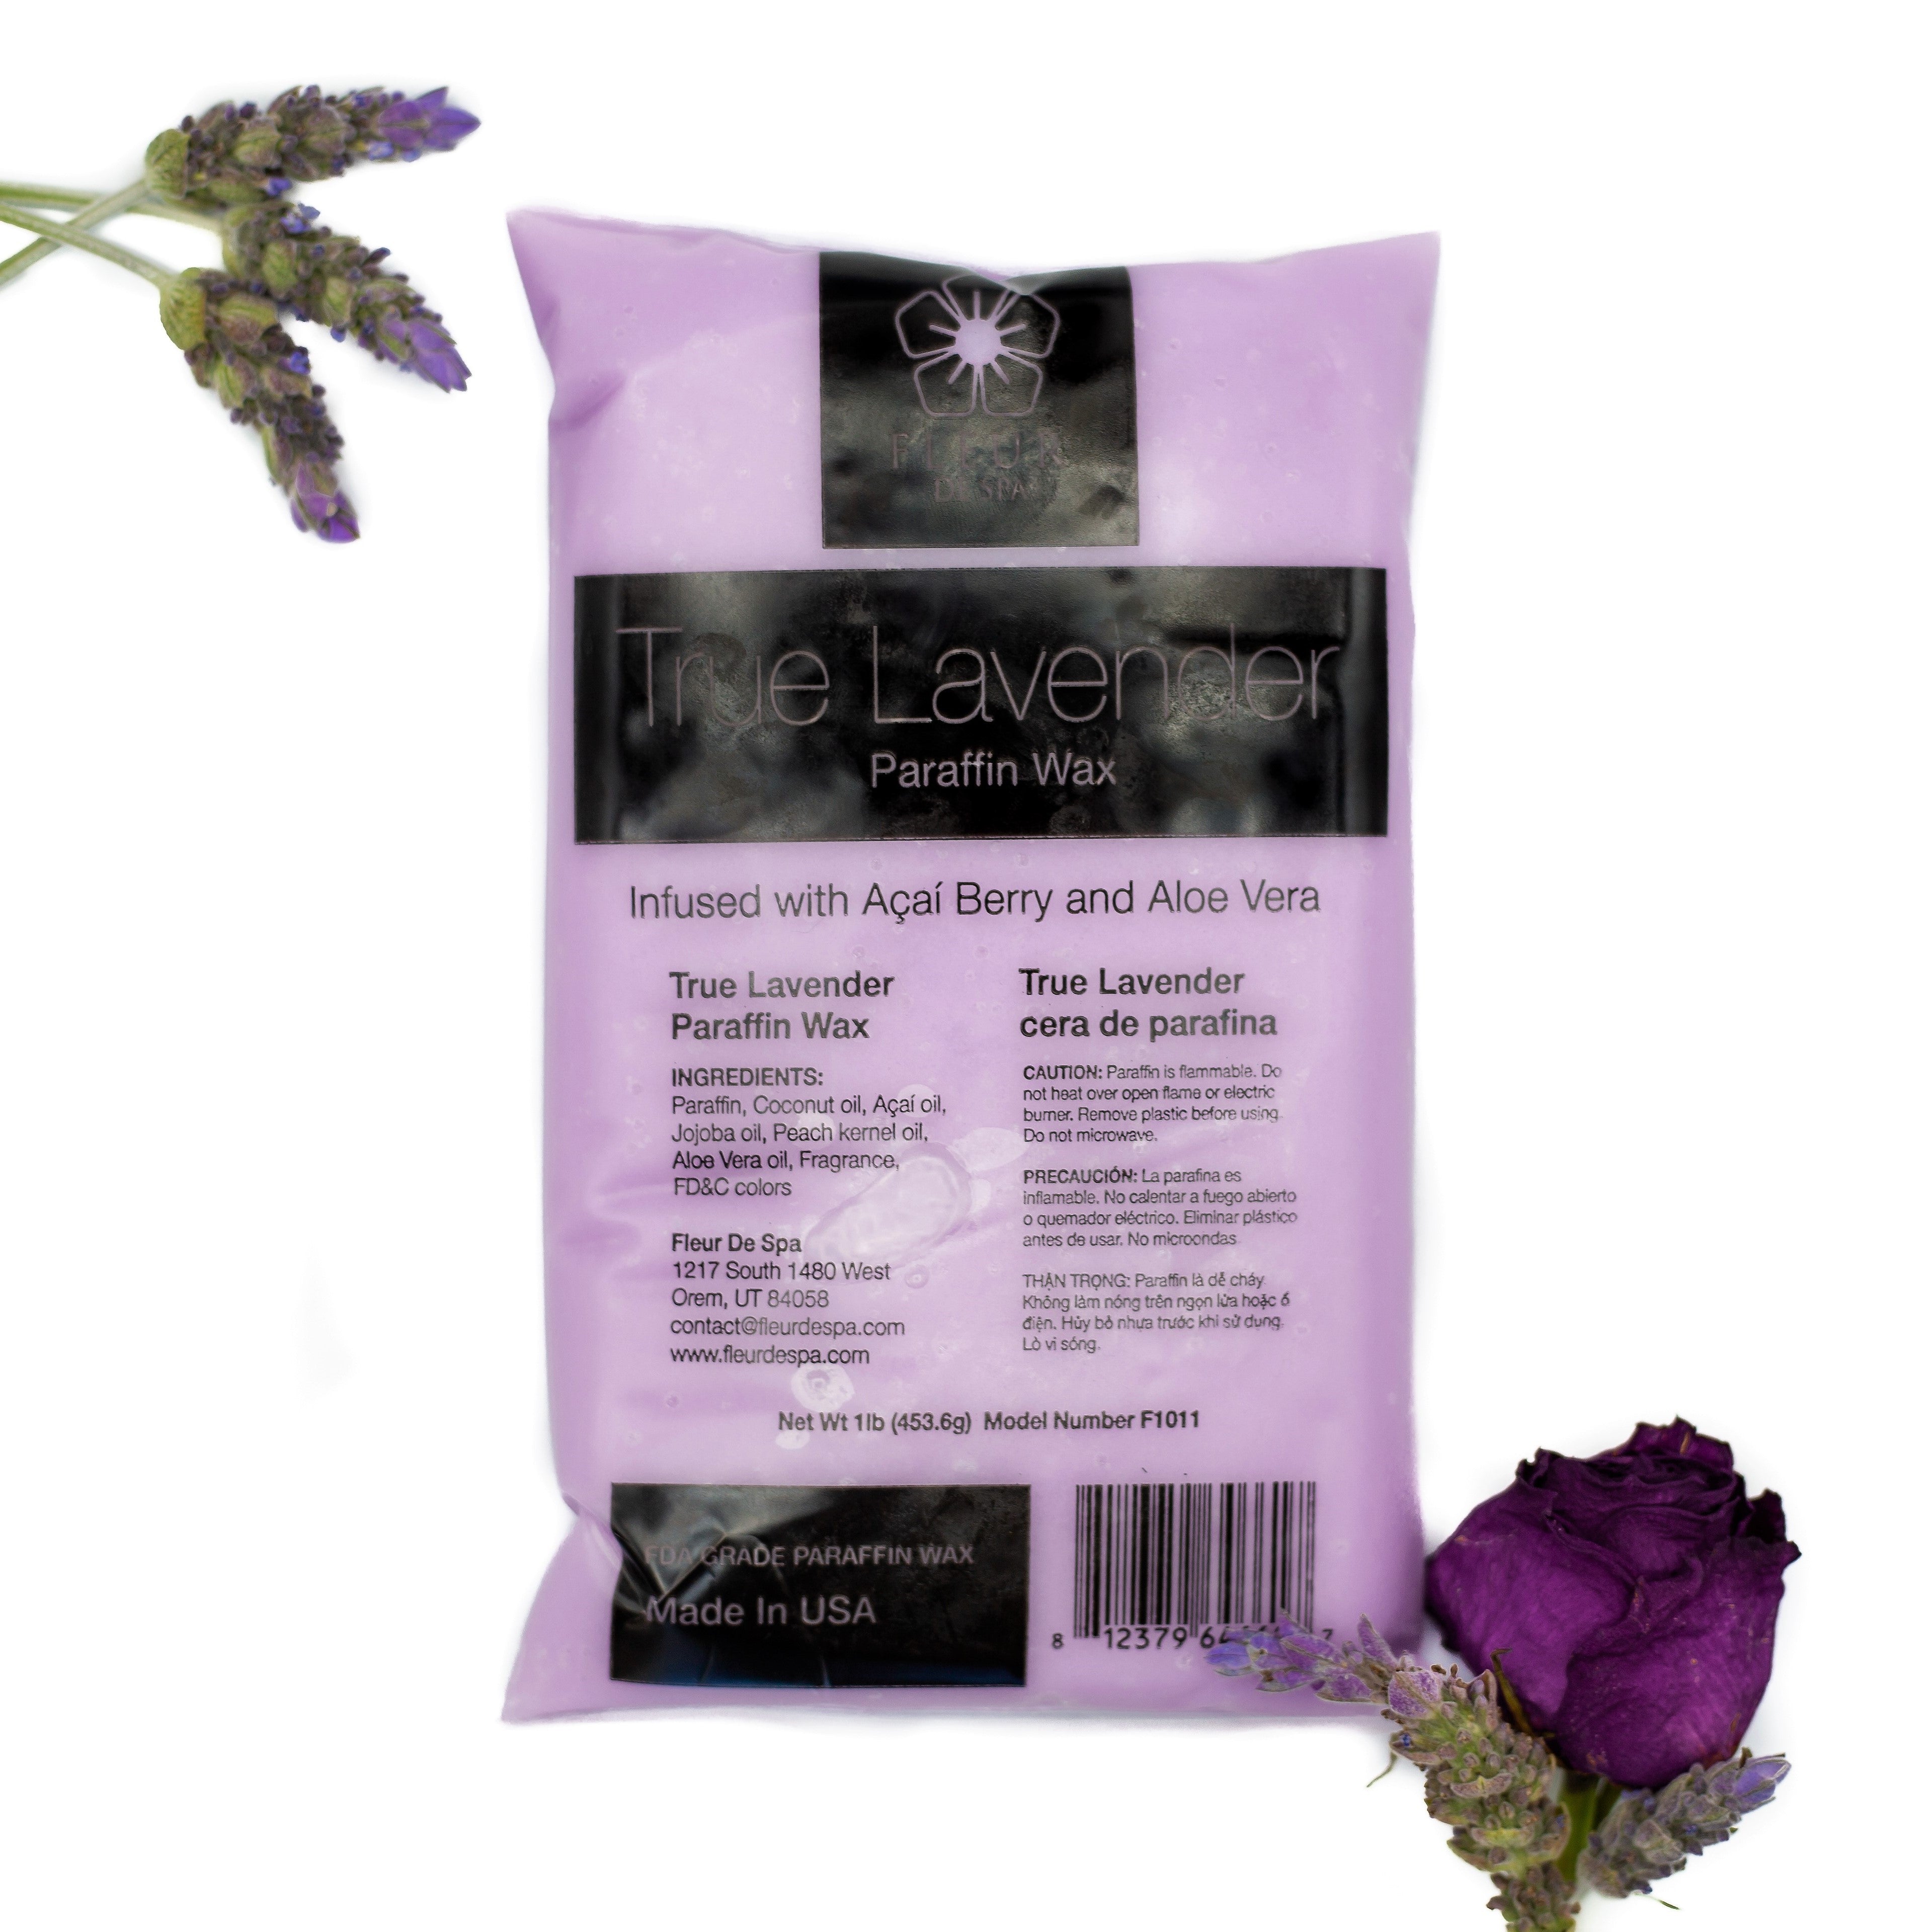 Paraffin Wax Refills by M21: Lavender Paraffin Wax Block, Use in